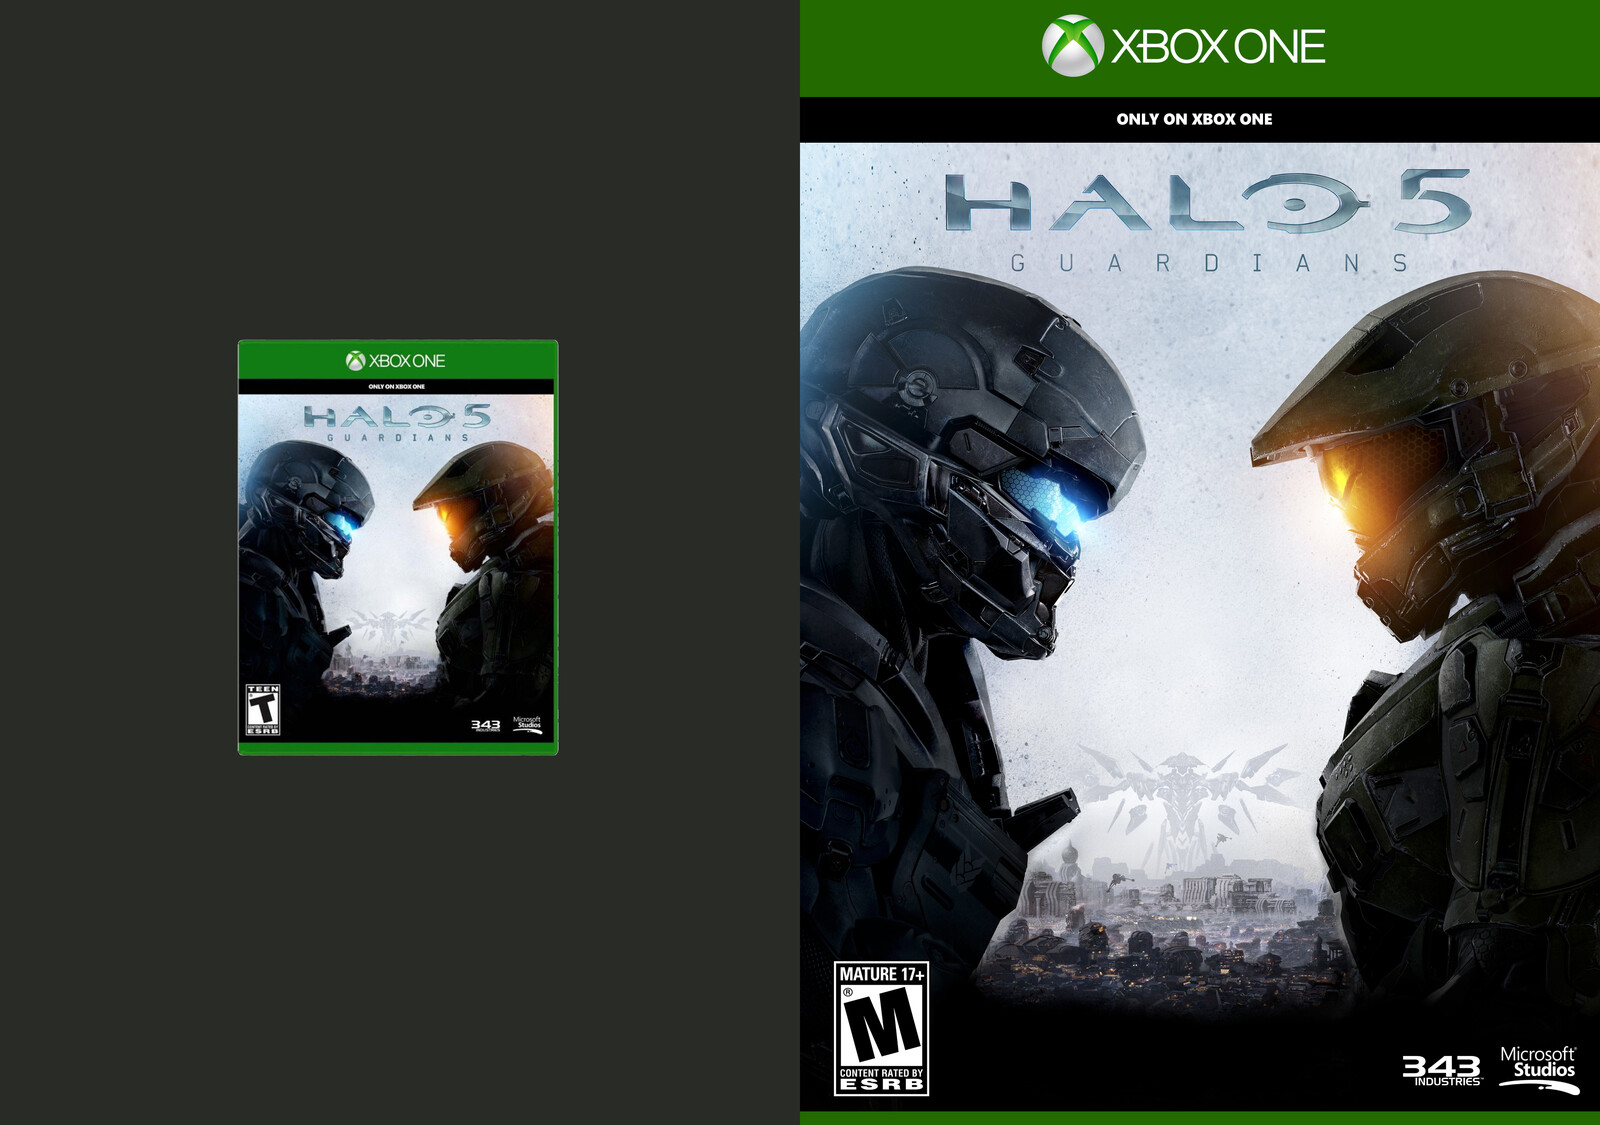 Halo 5 (original scan cover vs. upscaled)